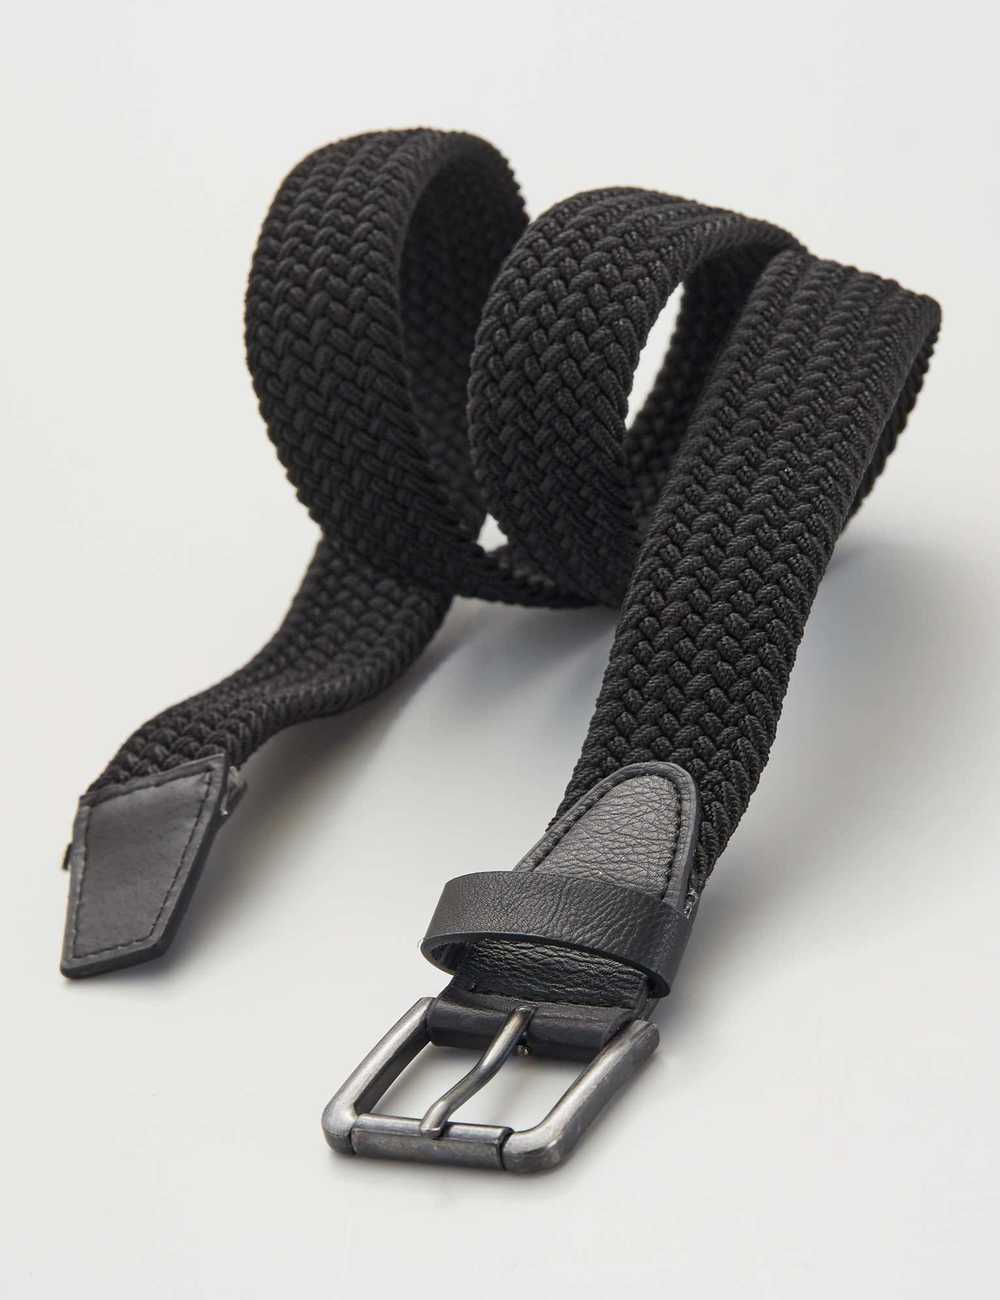 Buy Braided belts - Pack of 2 Online in Dubai & the UAE